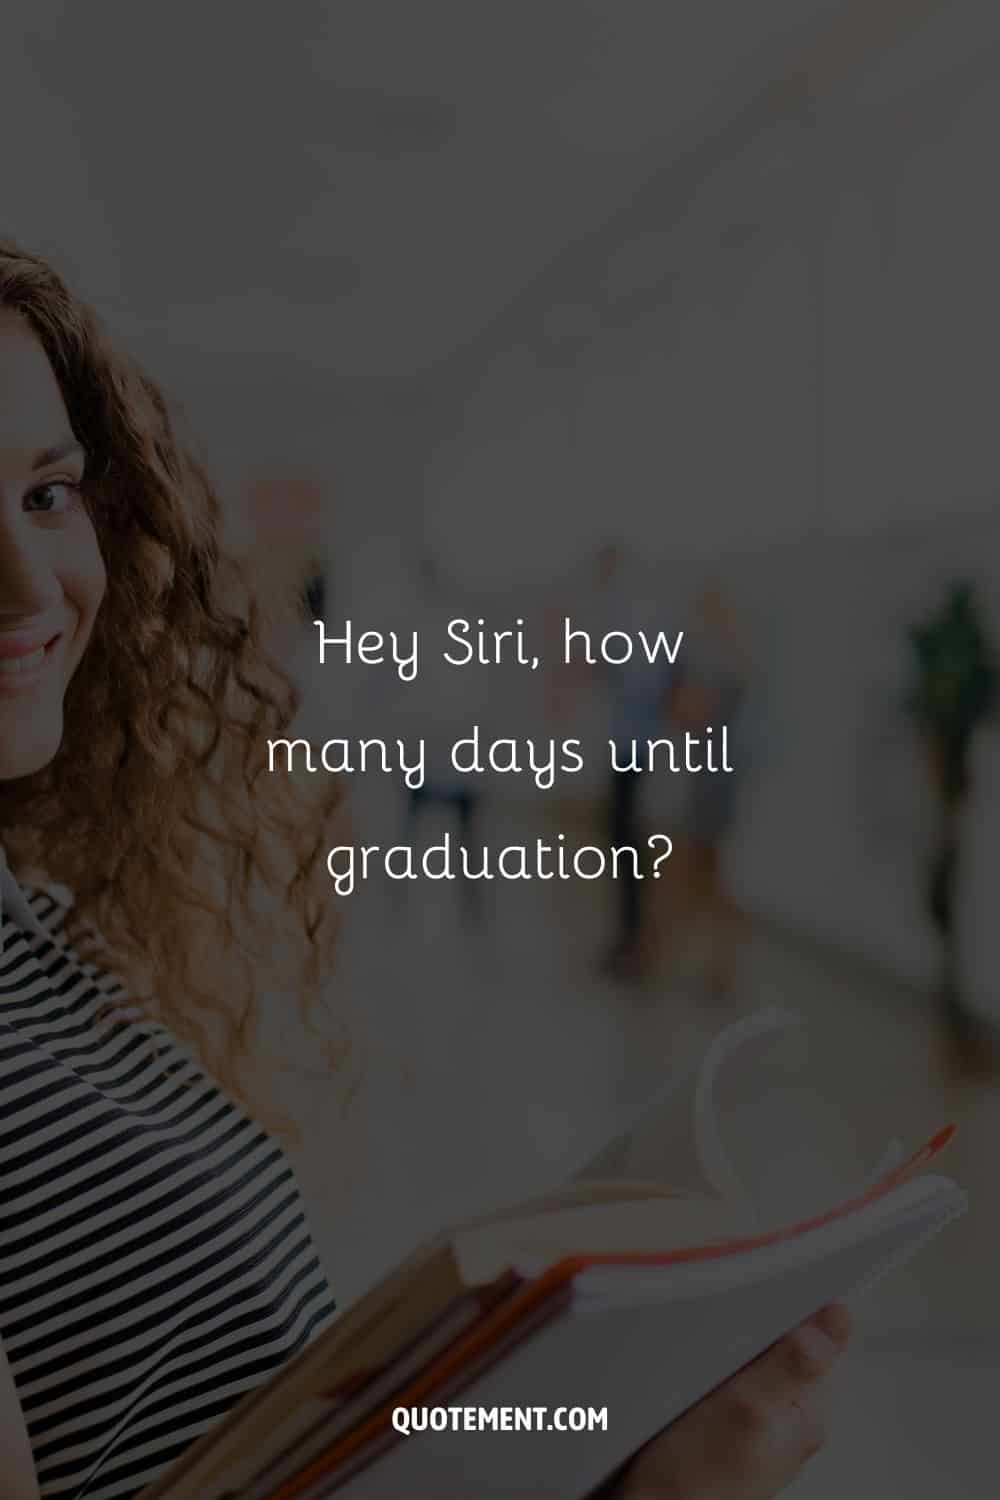 Hey Siri, how many days until graduation